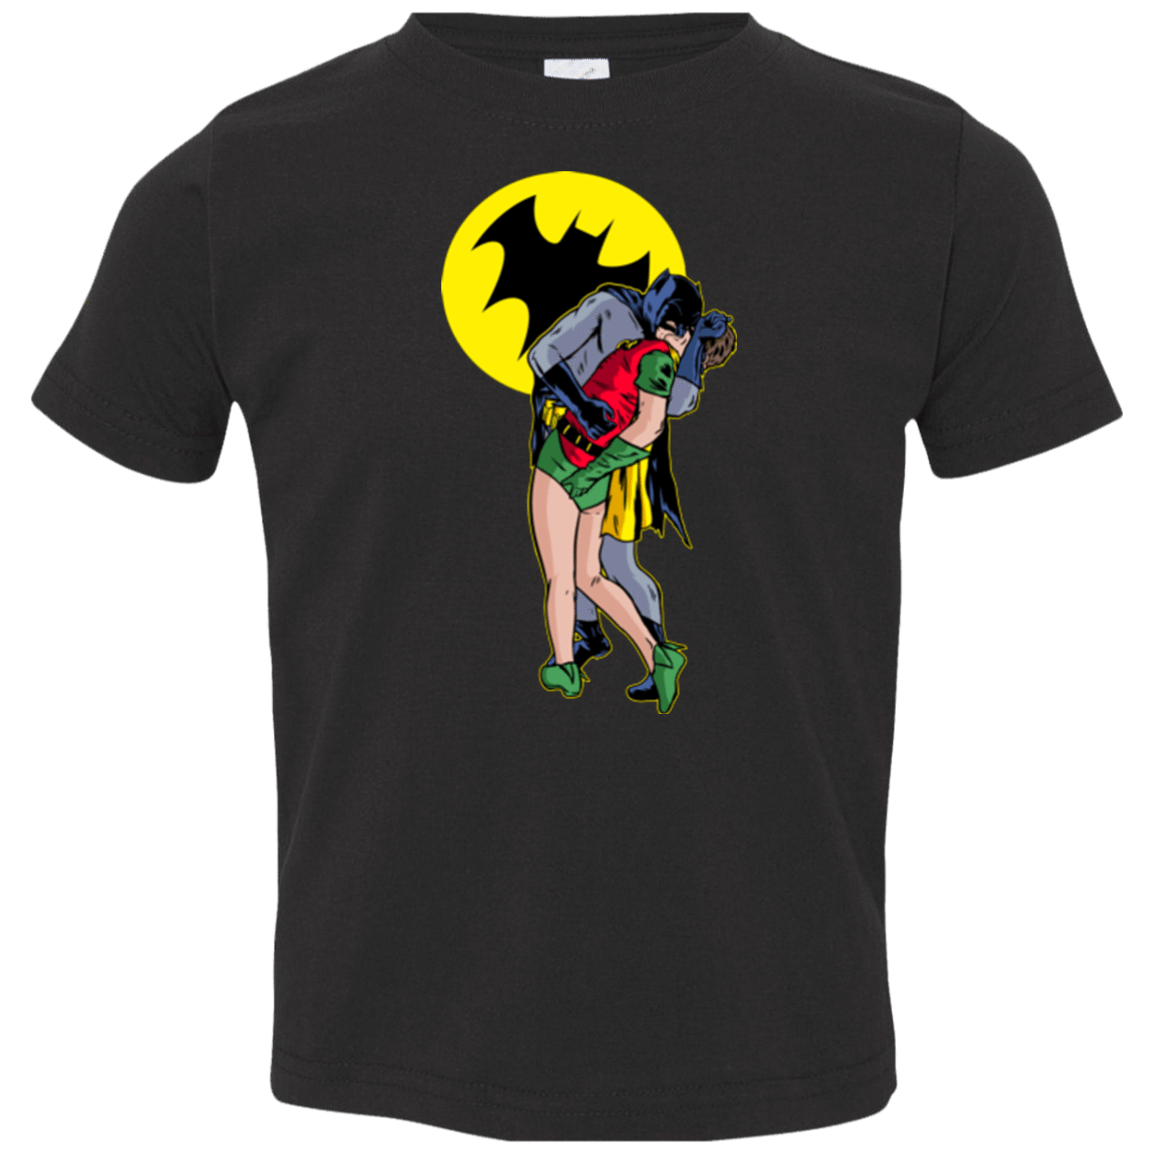 T-Shirts Black / 2T Batkiss Signal Toddler Premium T-Shirt